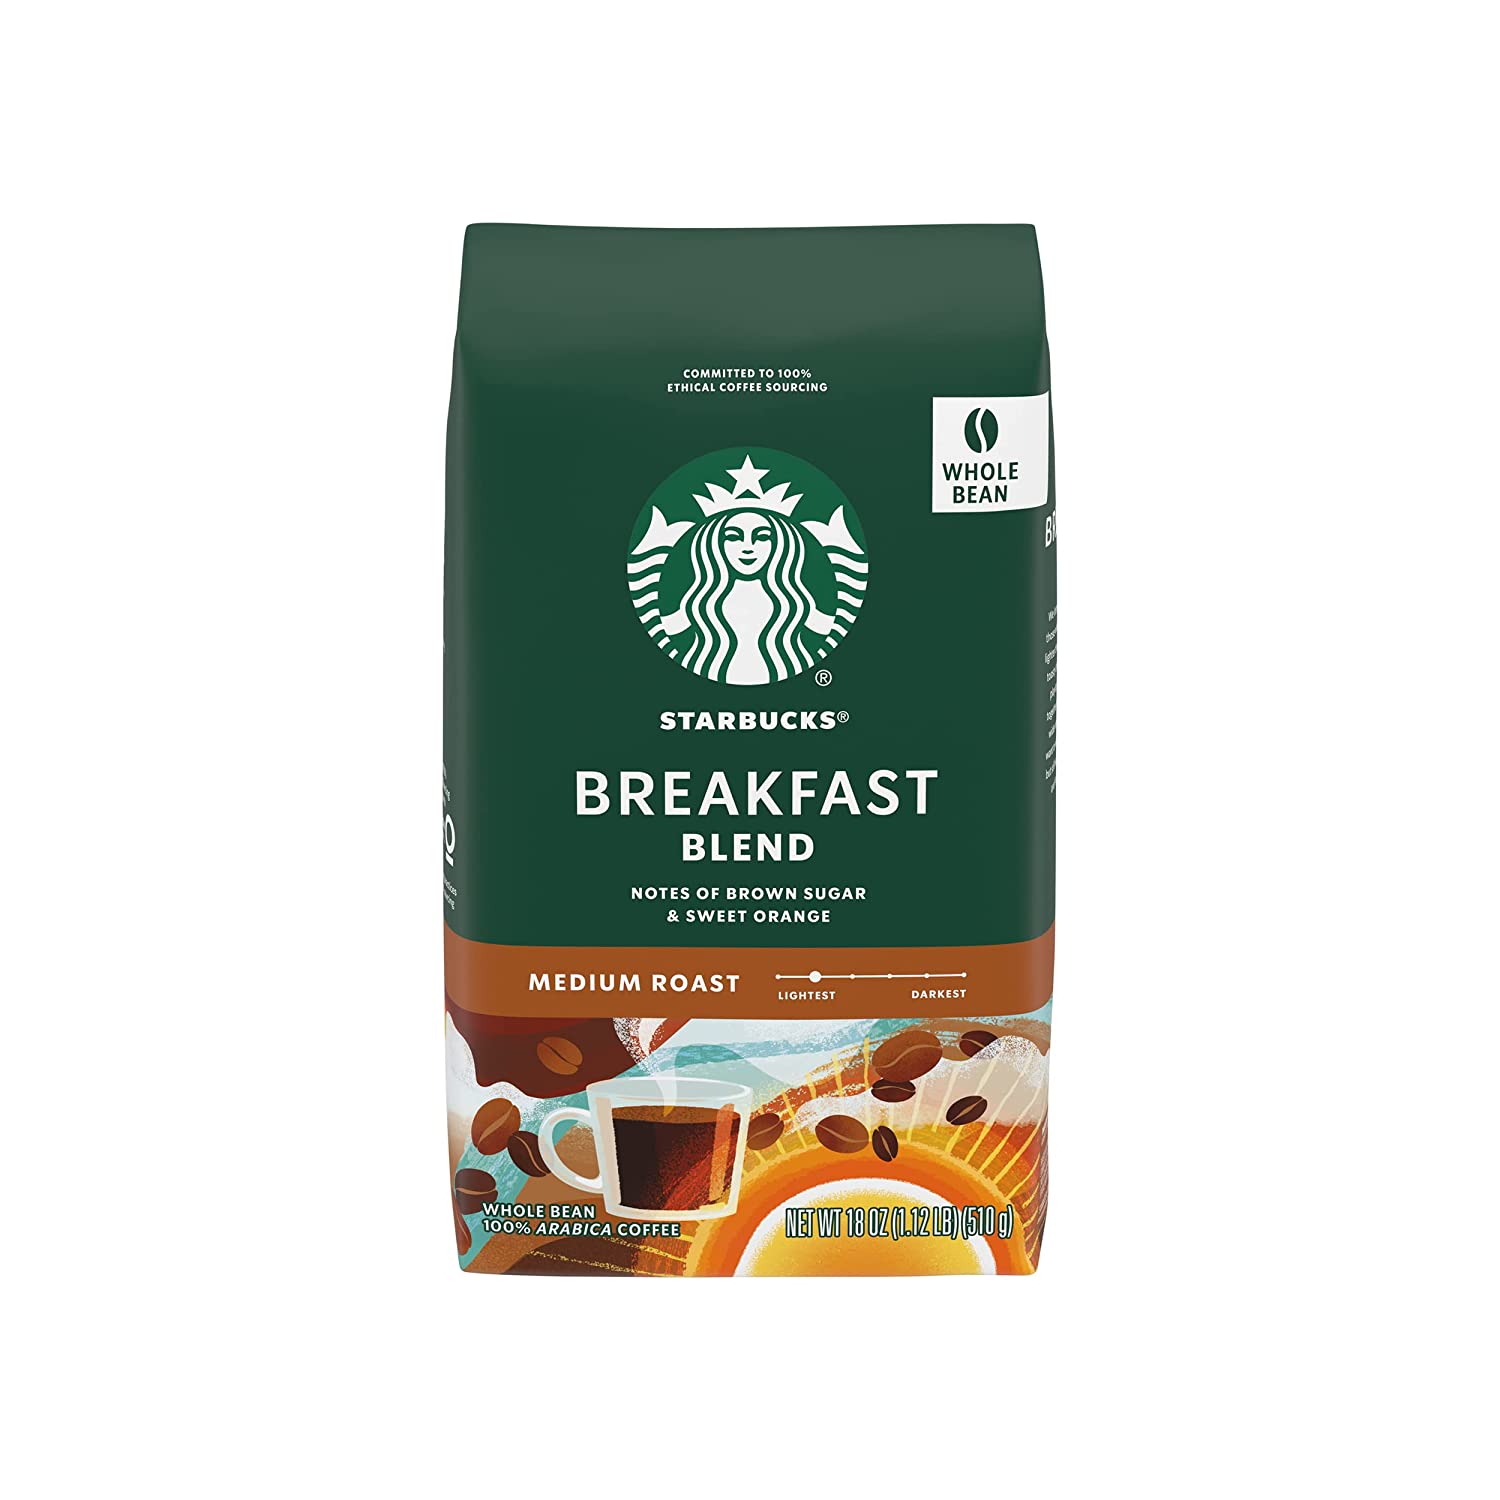 18-Oz Starbucks Medium Roast Whole Bean Coffee (Breakfast Blend) $6.65 w/ S&S + Free Shipping w/ Prime or on $25+